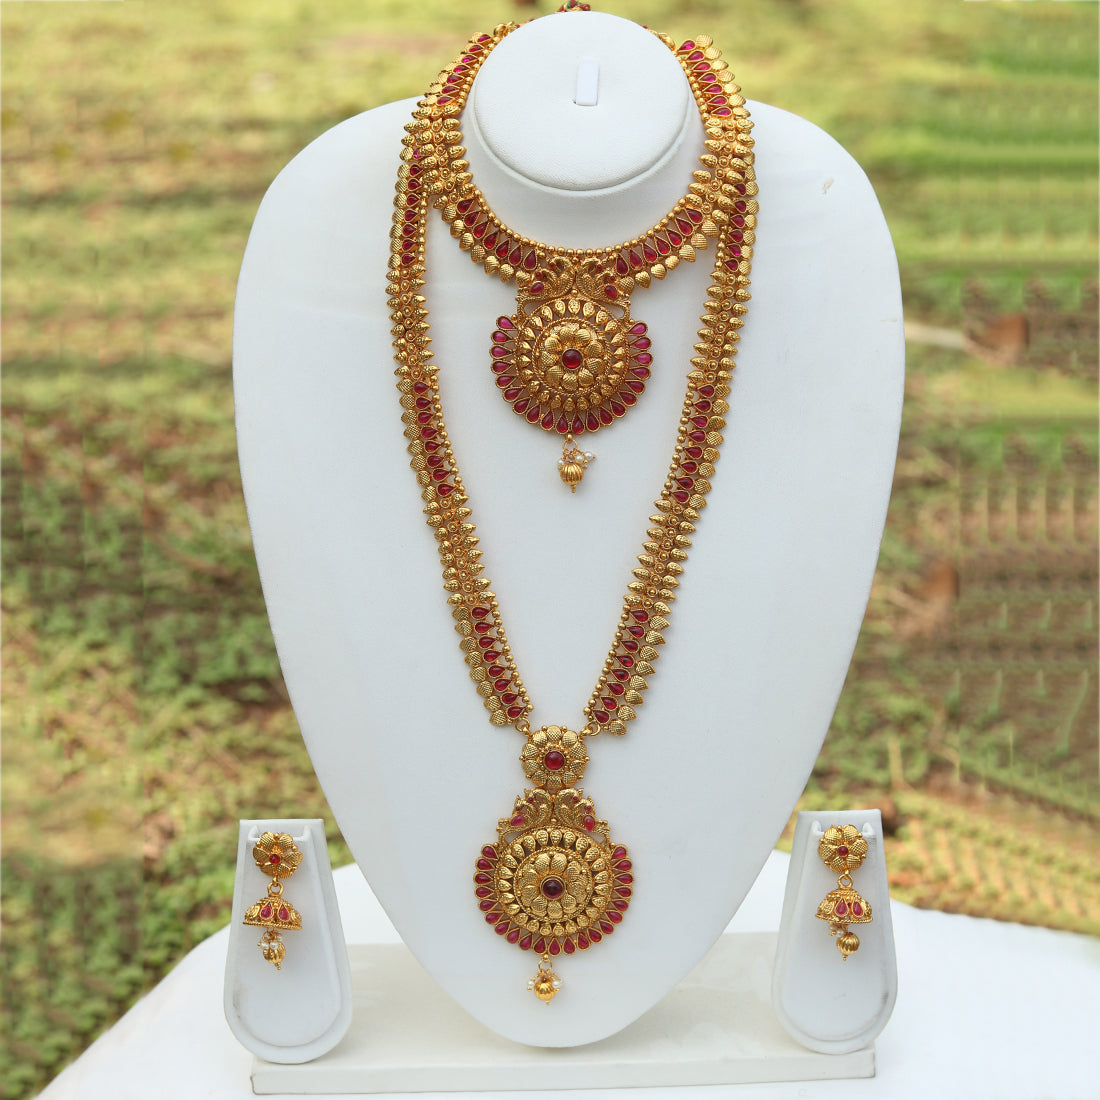 Amazing Bridal Look Gold Plated Long Haram Wedding Necklace with Jhumki Earring Set